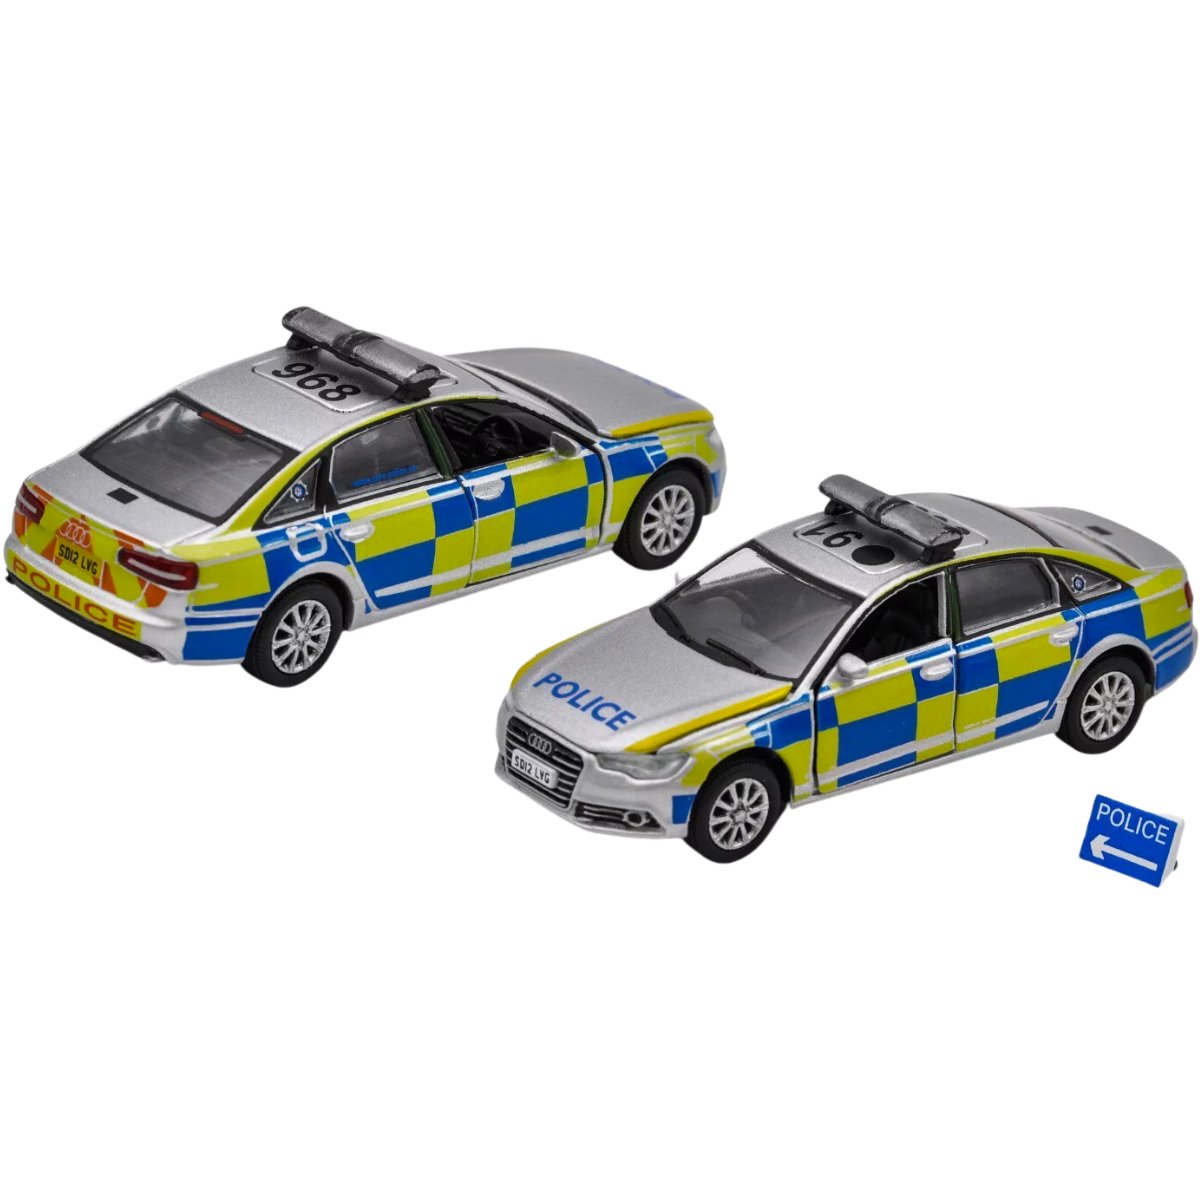 Era Car Audi A6 UK Police Car - PSNI Police (1:64 Scale)